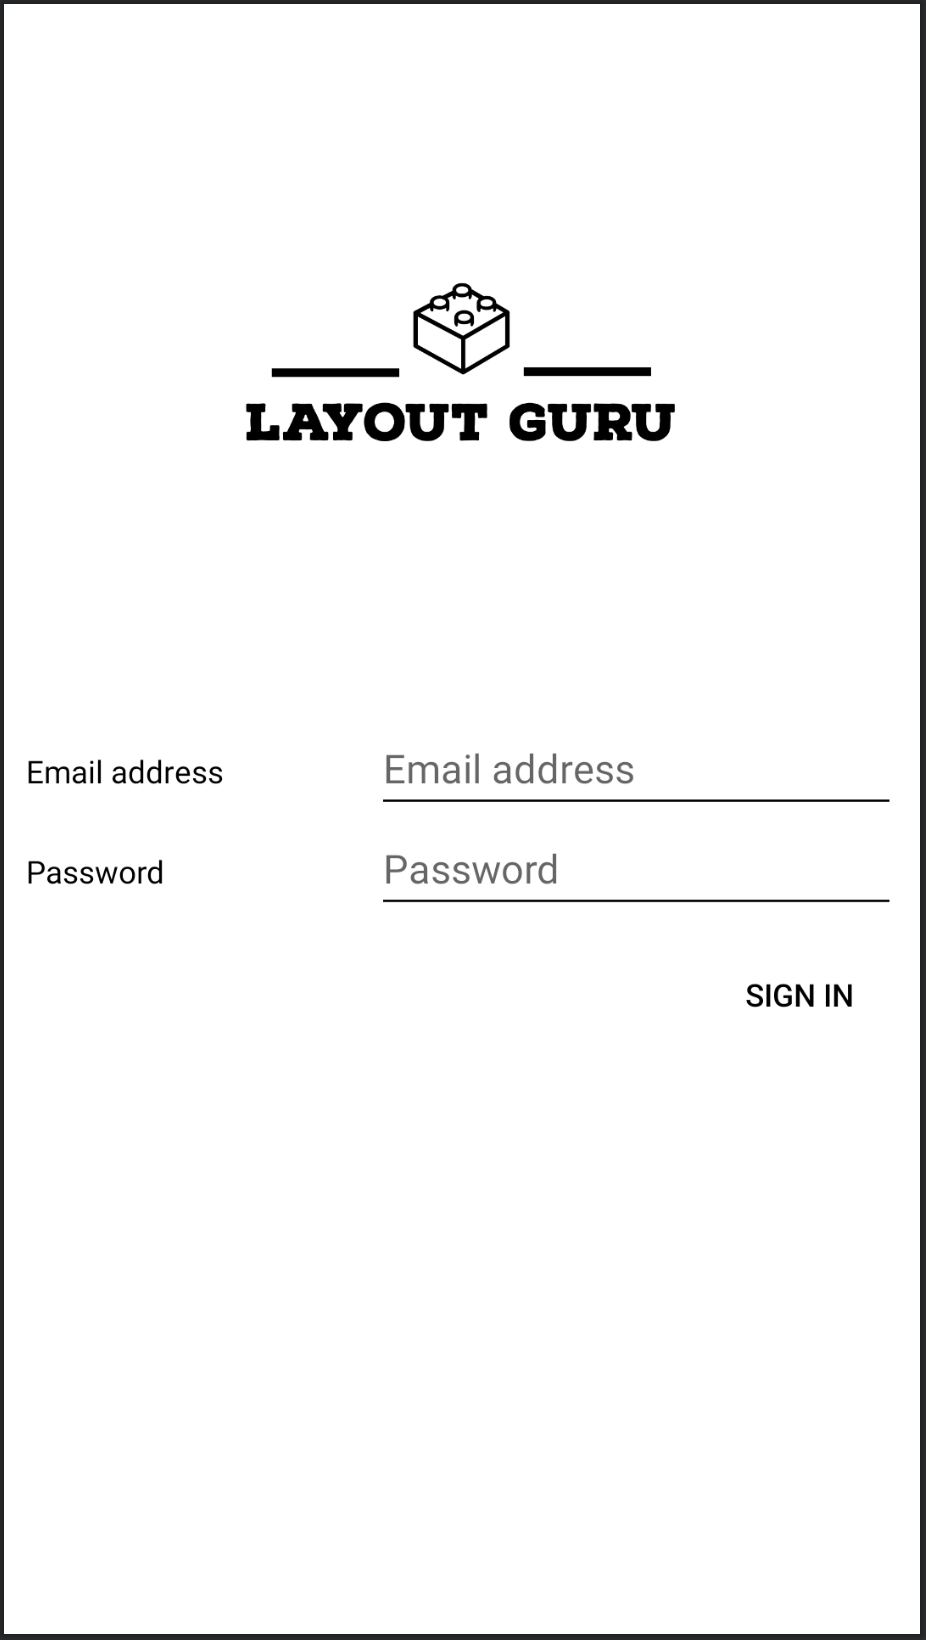 Layout Guru’s login screen